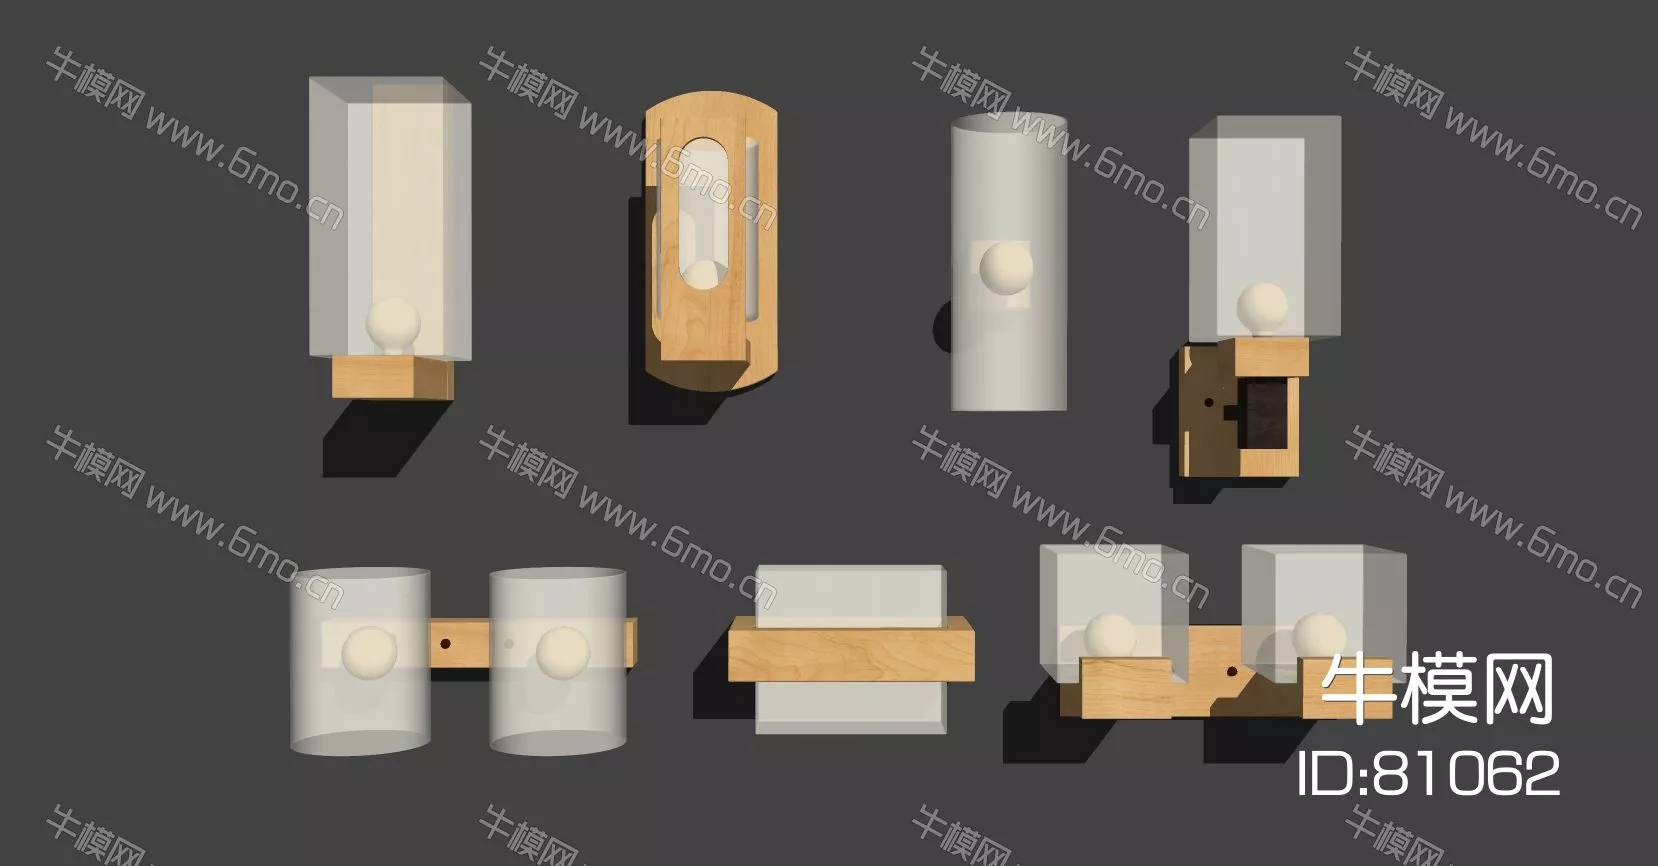 NORDIC WALL LAMP - SKETCHUP 3D MODEL - ENSCAPE - 81062